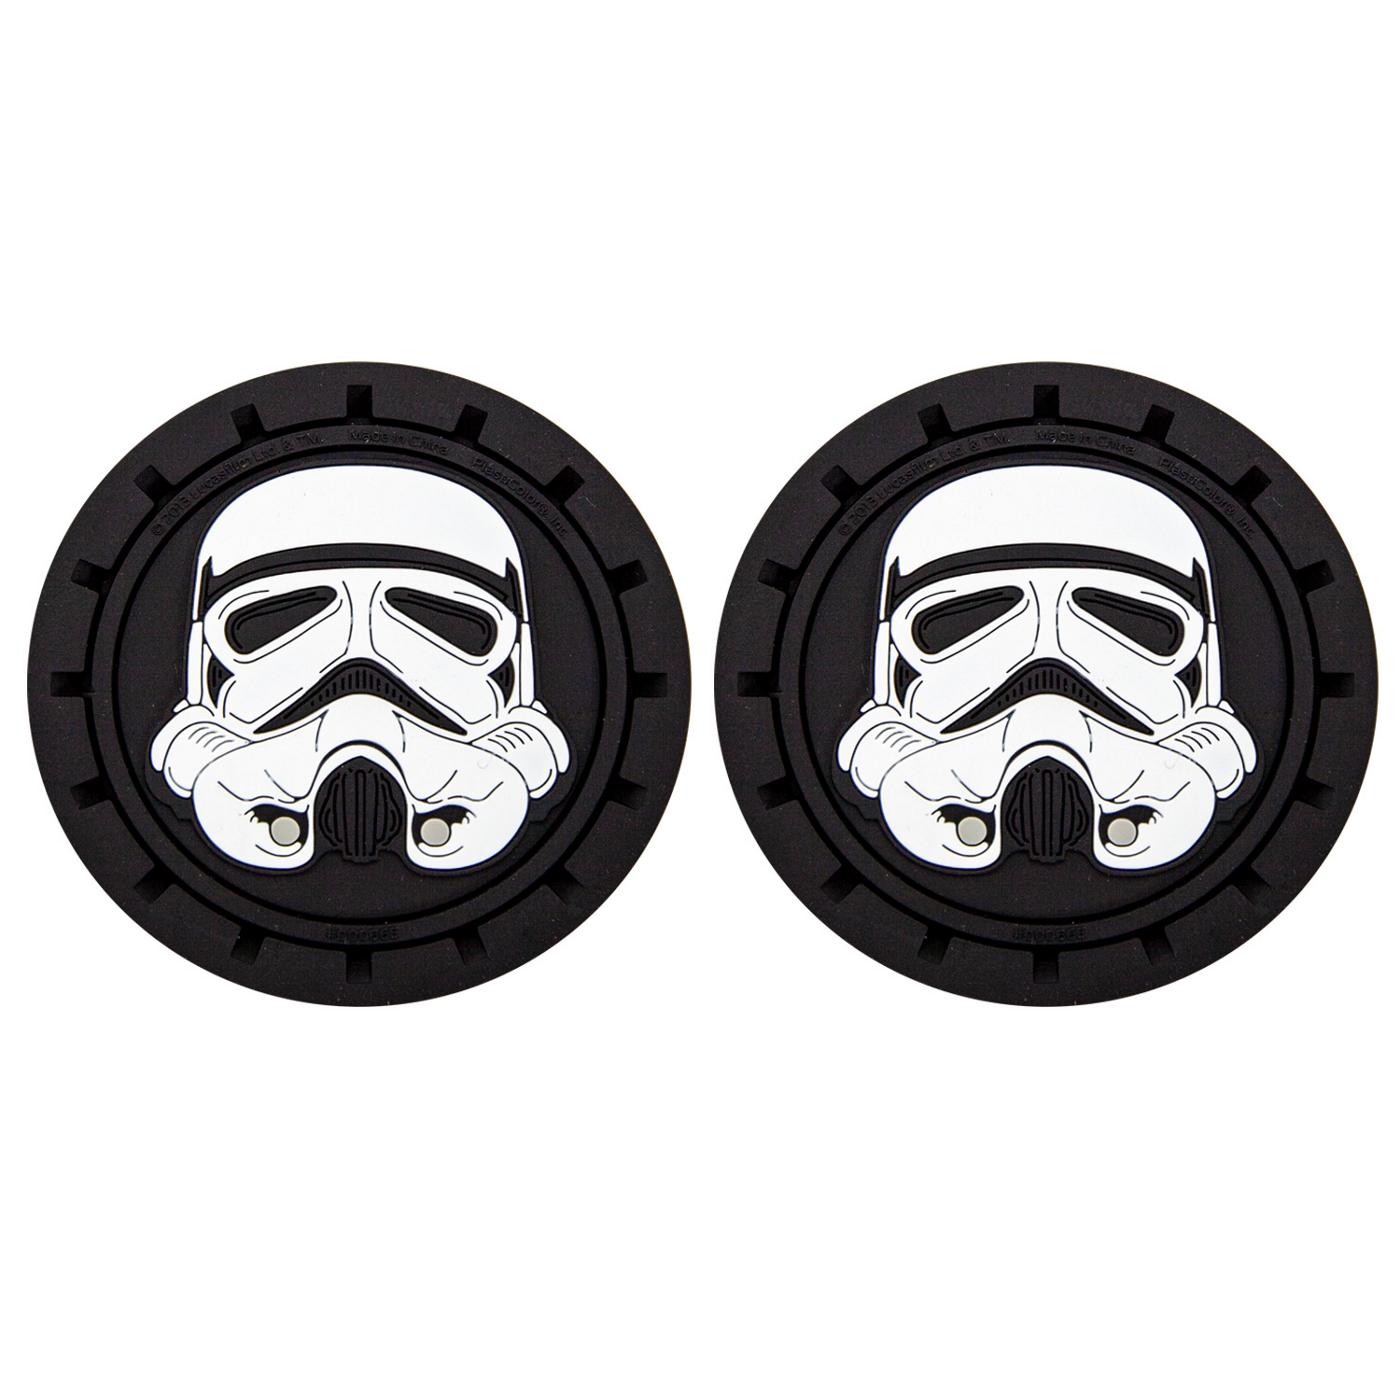 Star Wars Stormtrooper Coasters - Shop Car Accessories at H-E-B